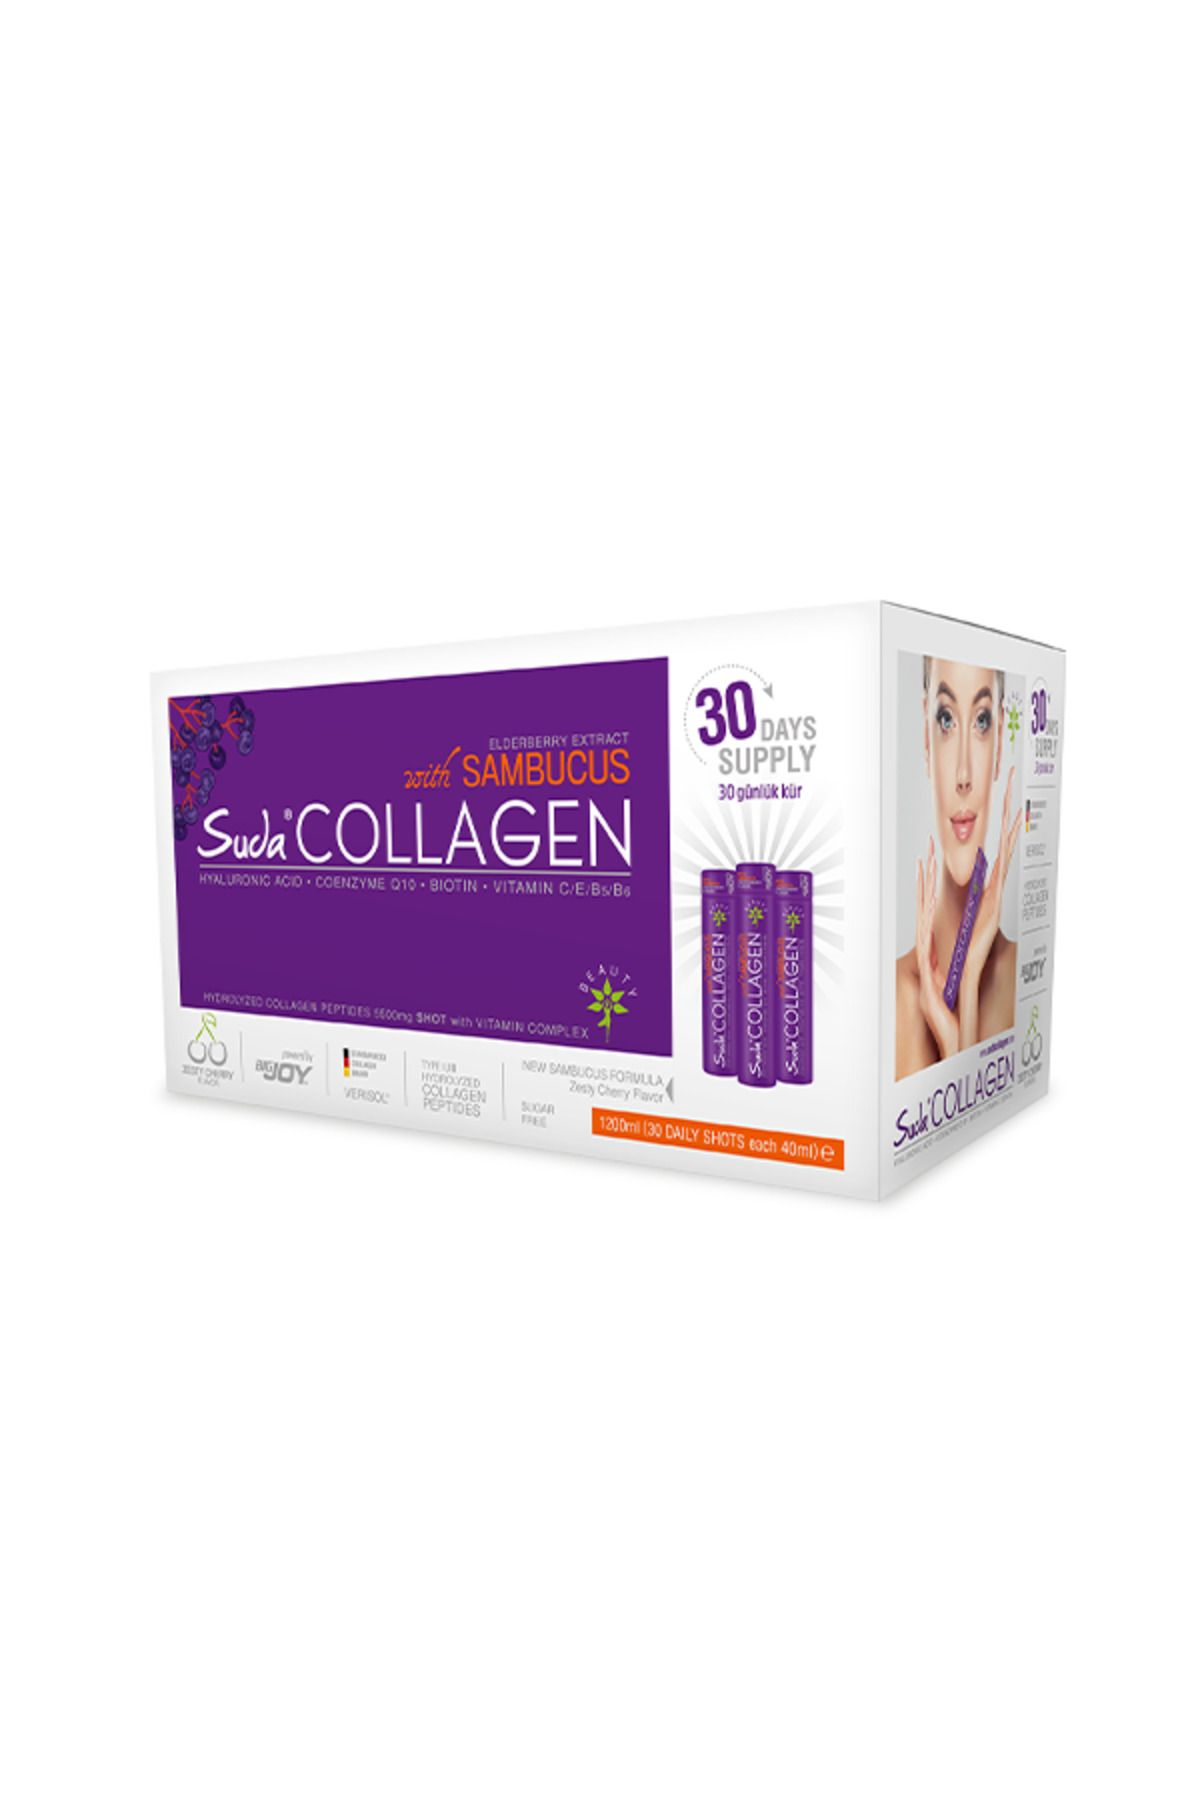 Suda Collagen Sambucus Vişne Aromalı Kolajen 40mlx30 Shot